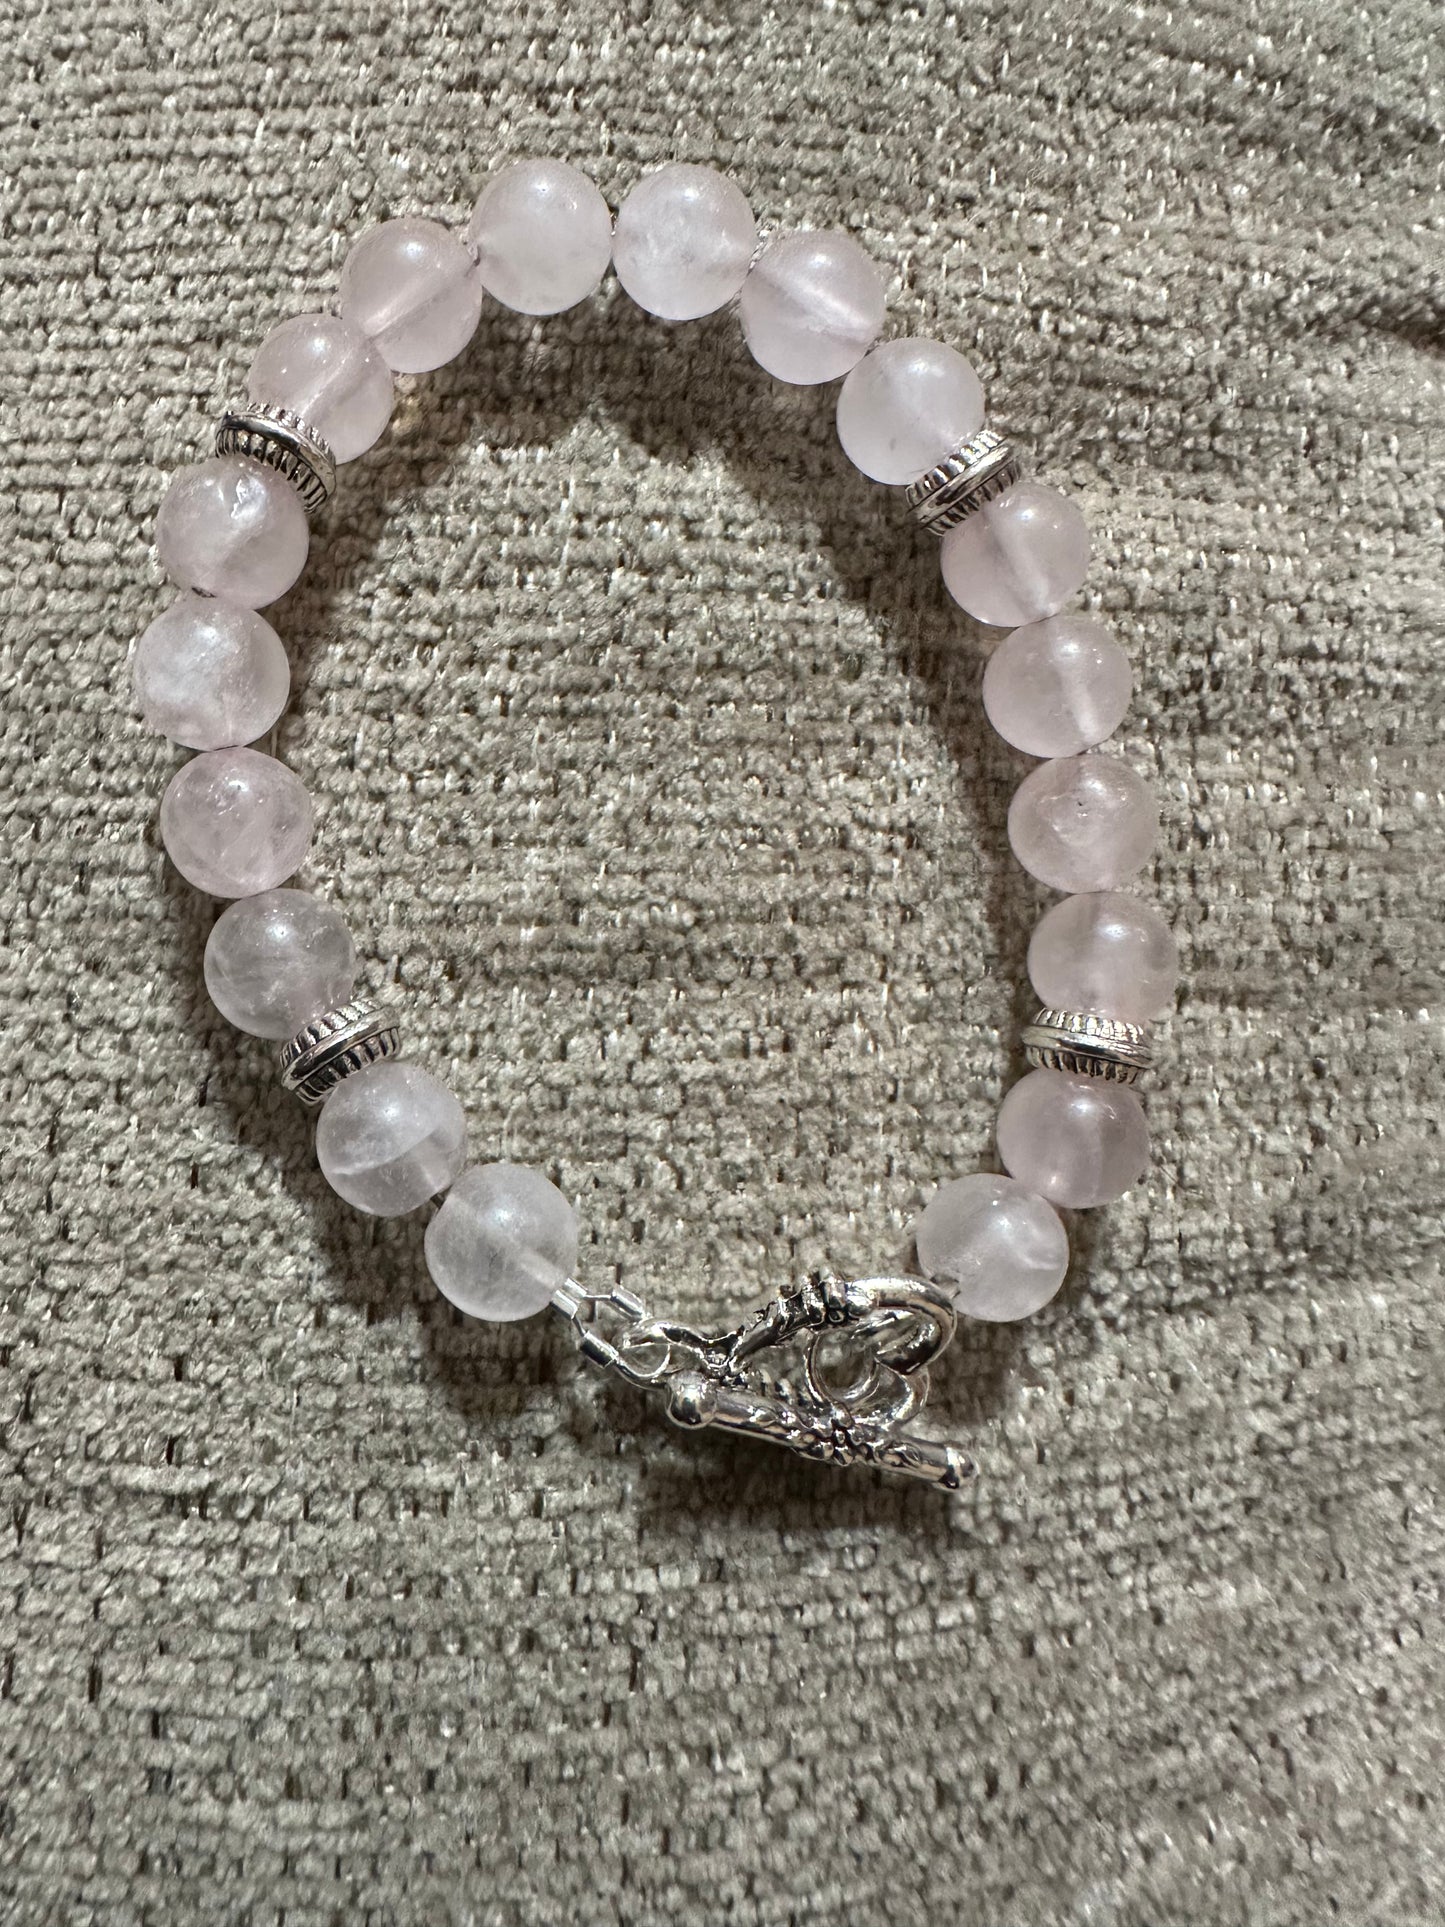 Rose Quartz Gemstone Bracelet w/ Heart Toggle Closure